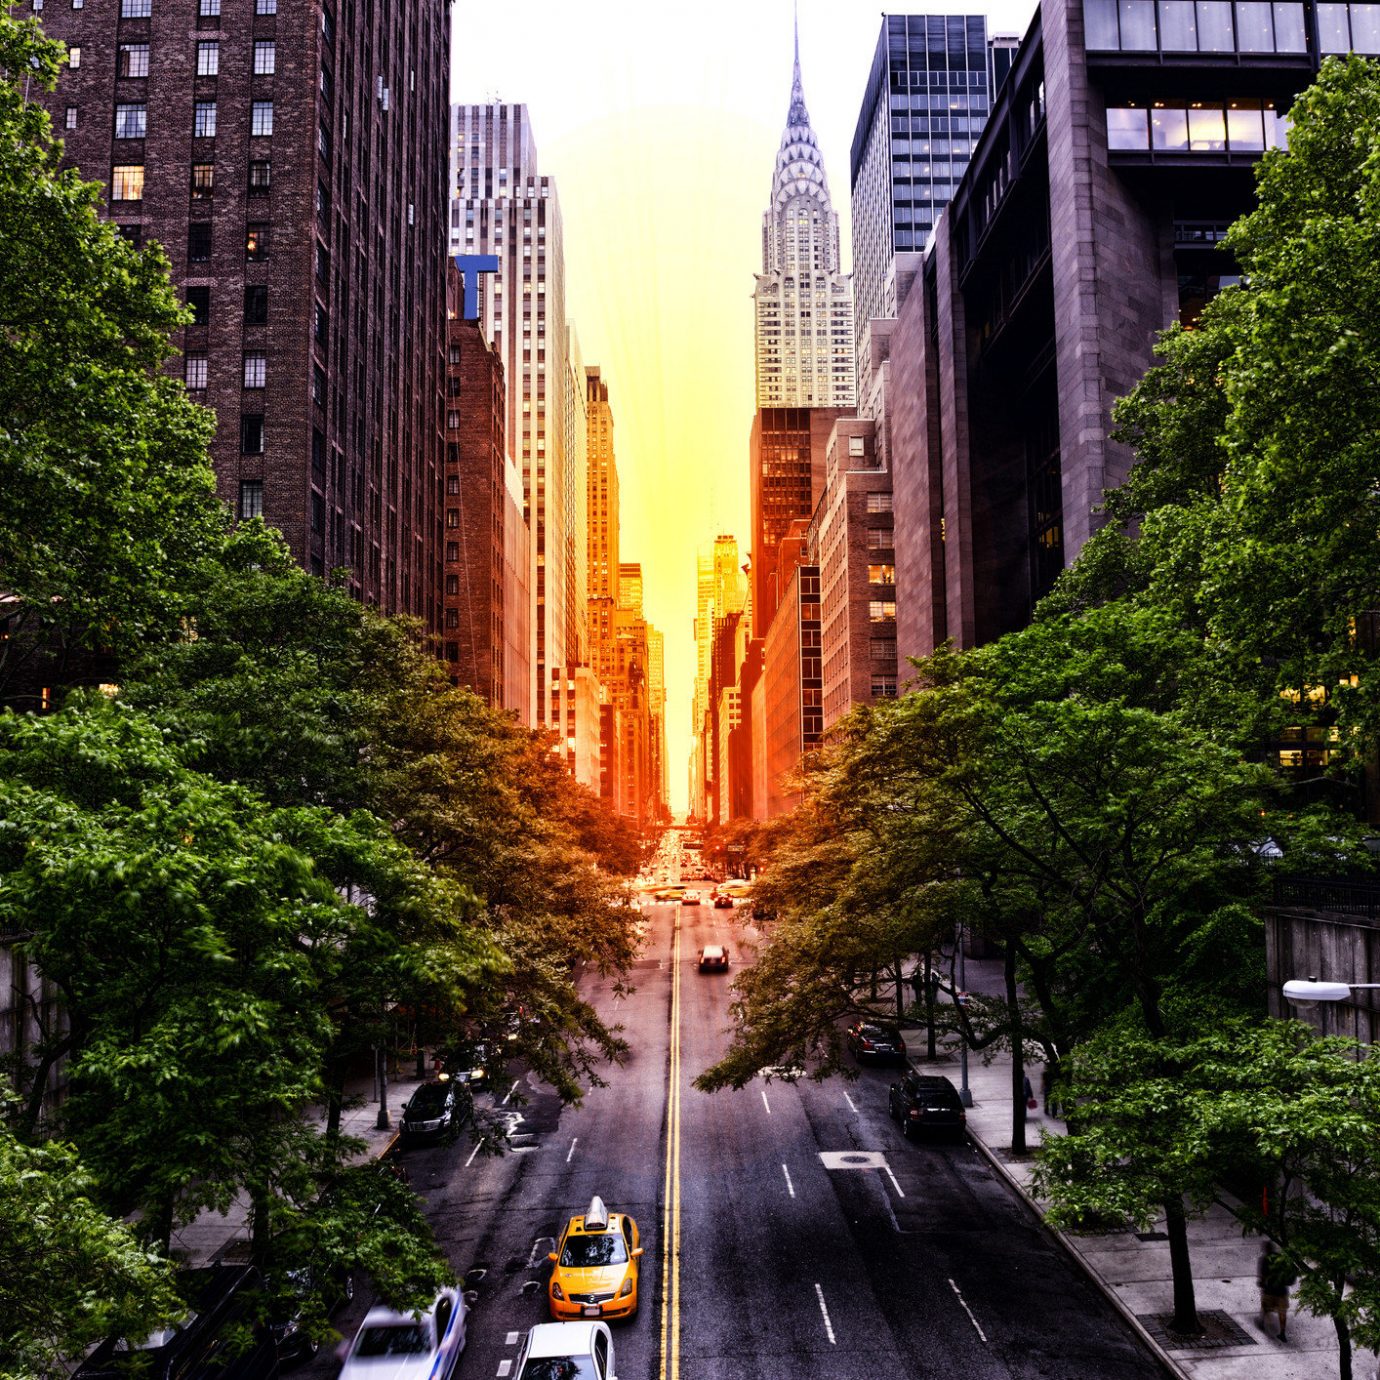 Street view in New York City